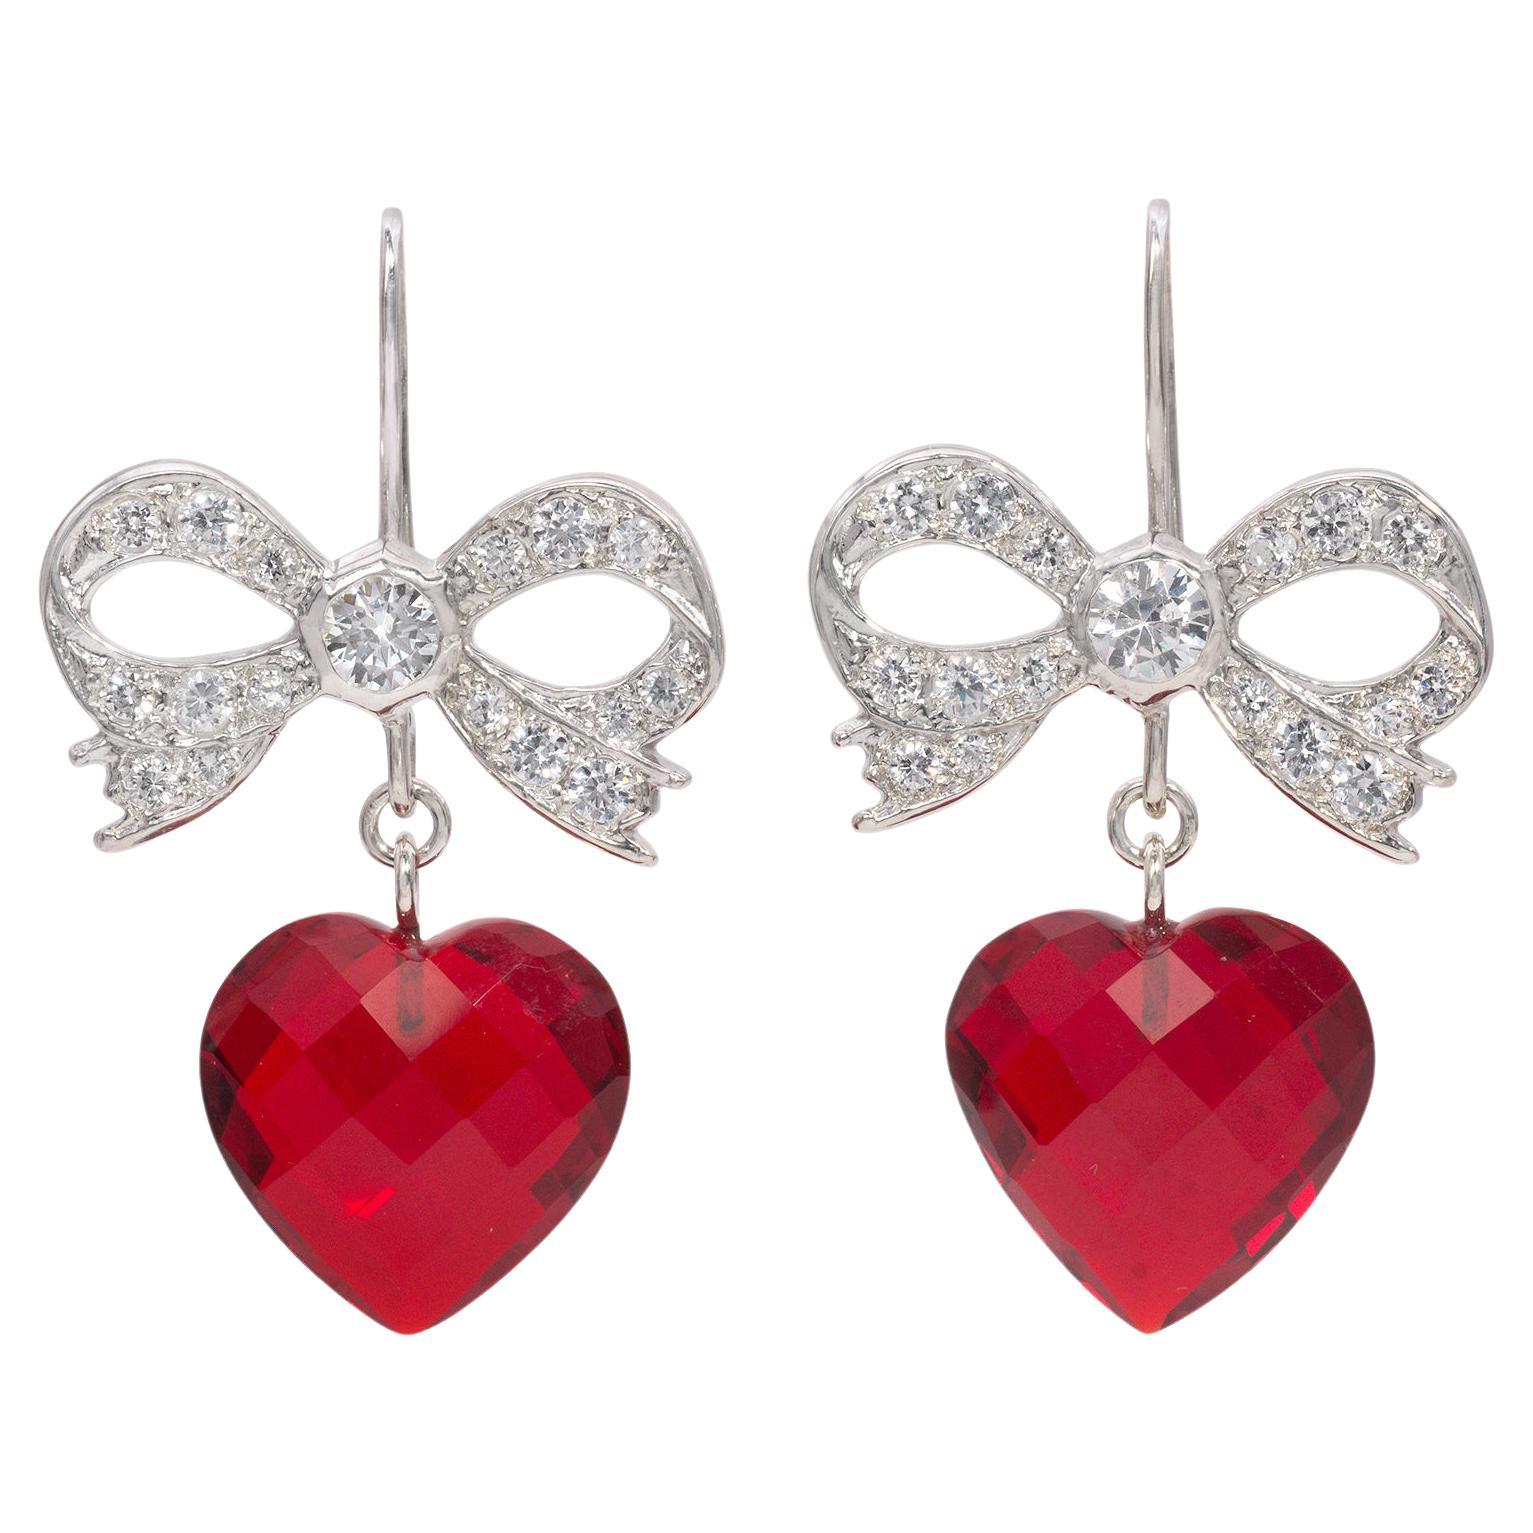        Swarovski Crystal Bow and Heart Earrings                    